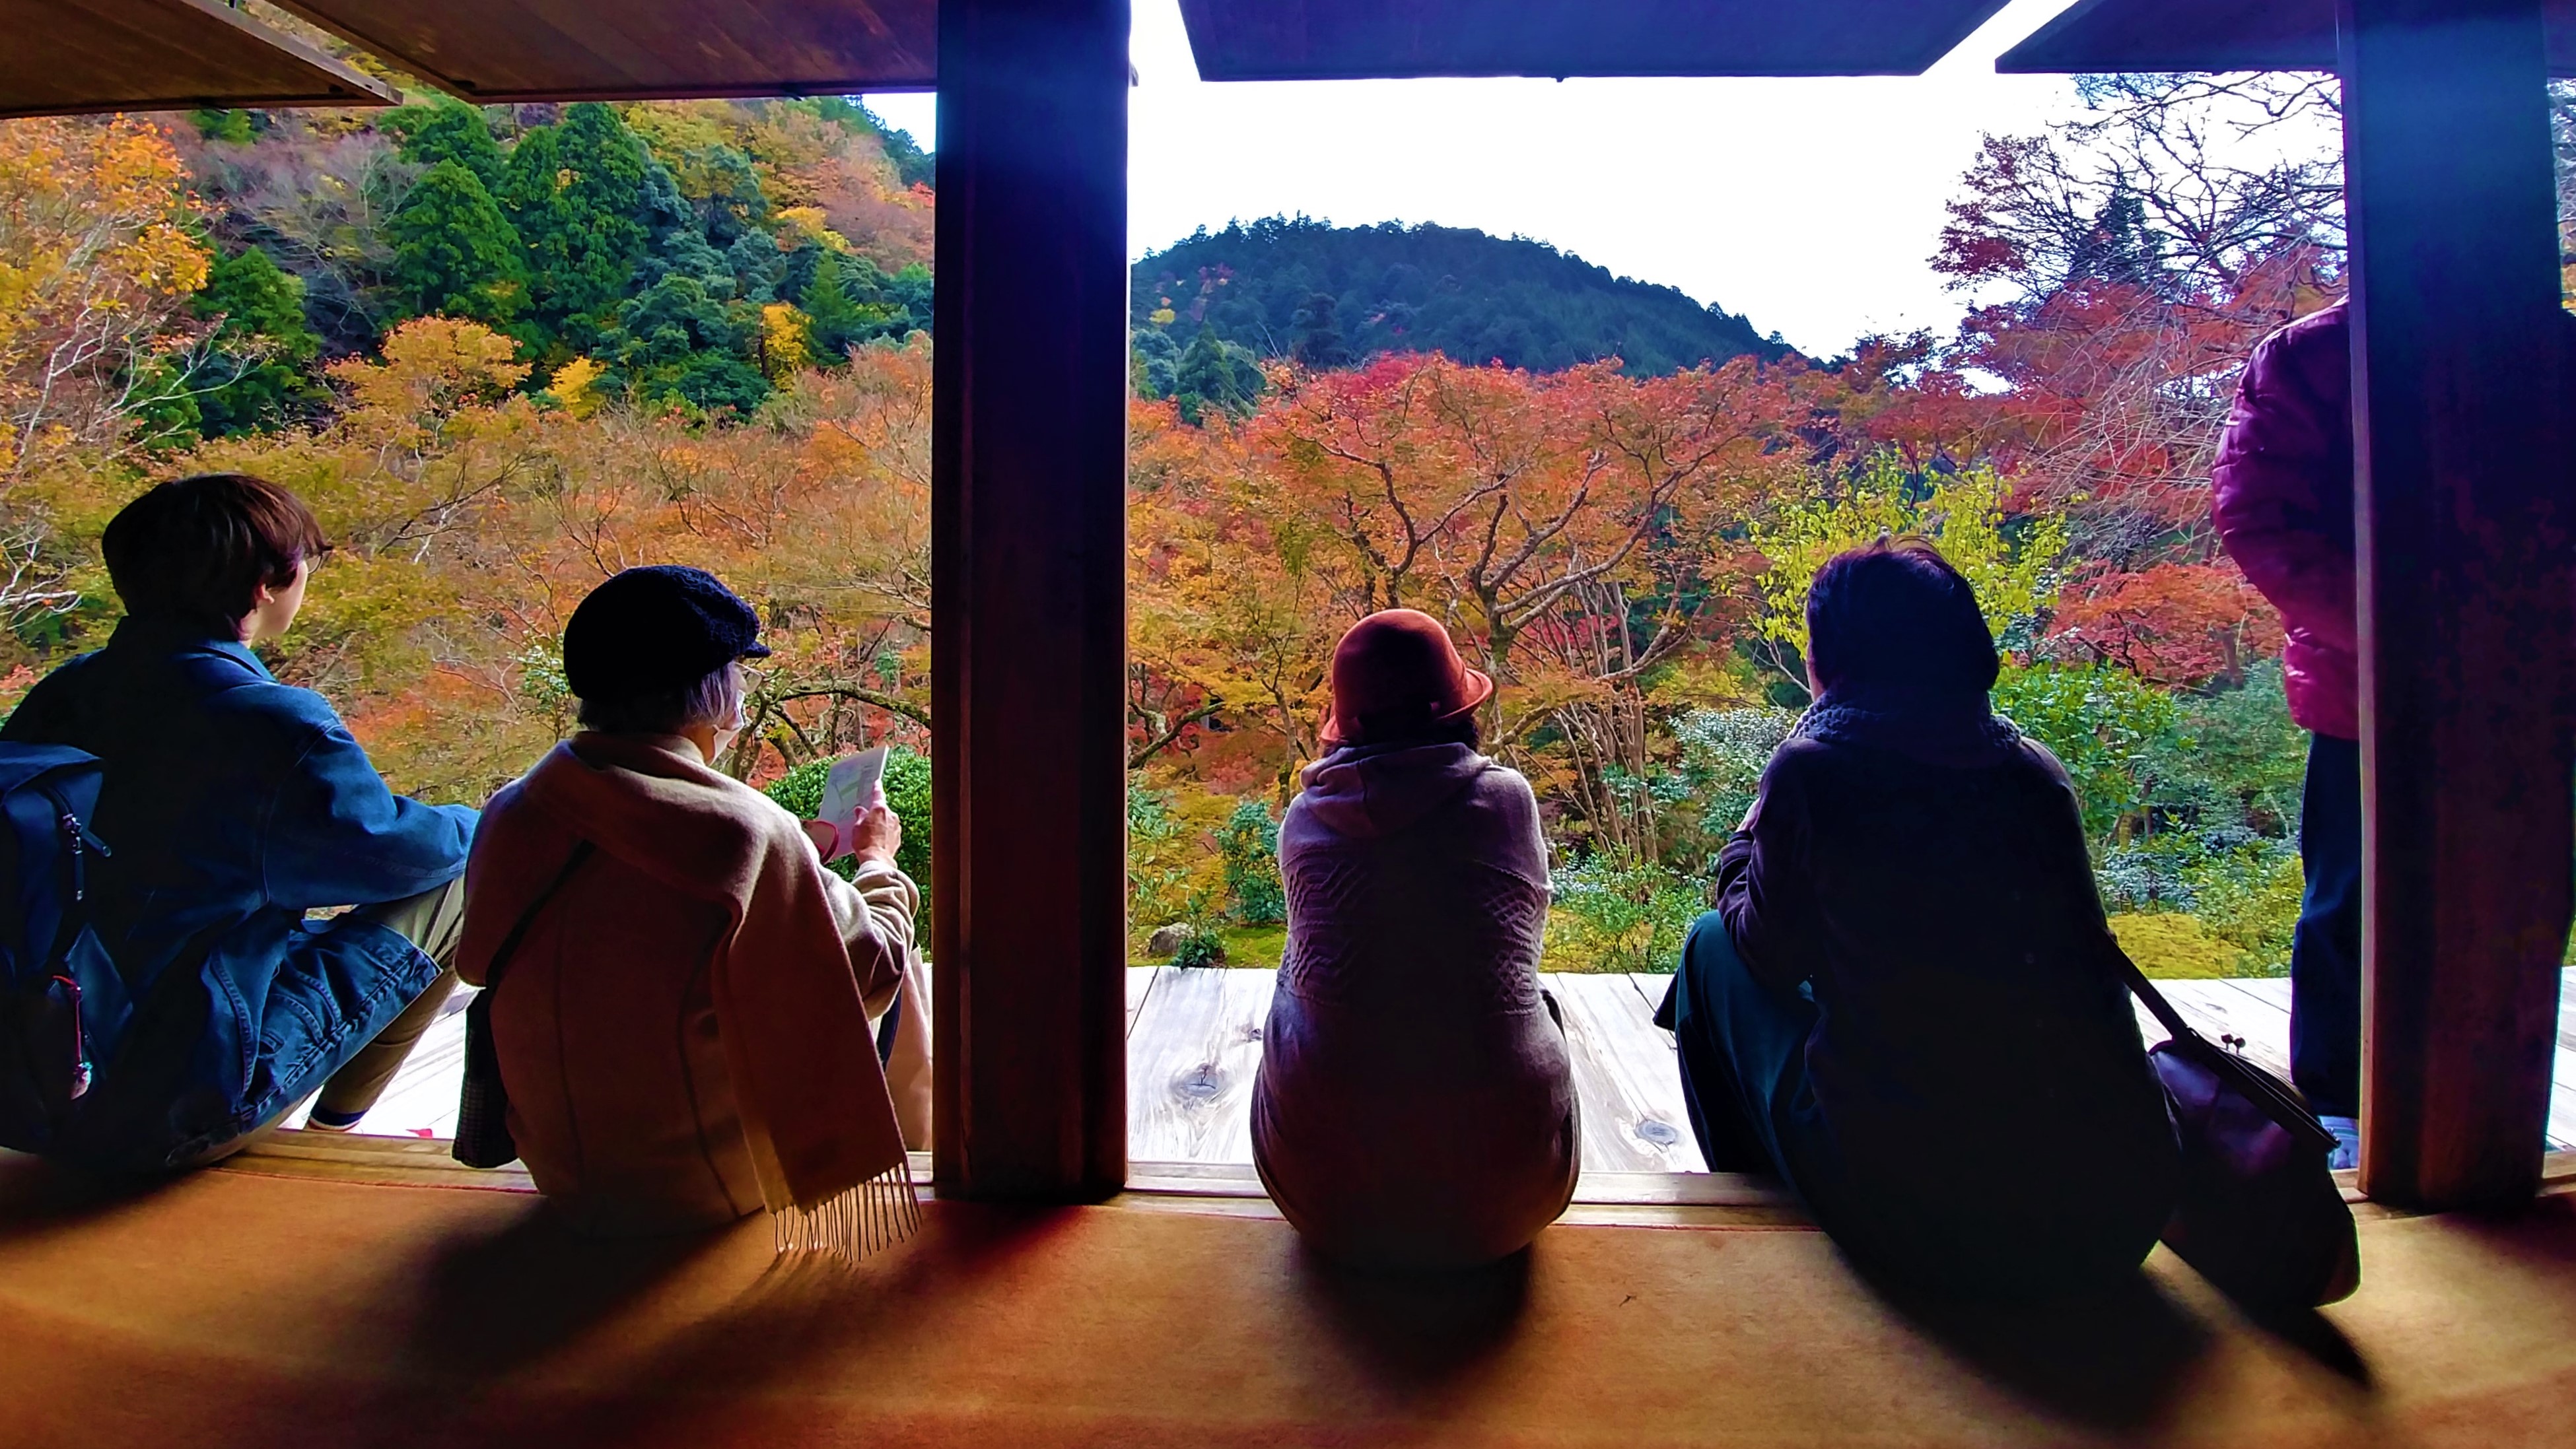 Kozan-ji kyoto momiji automne blog voyage japon arpenter le chemin